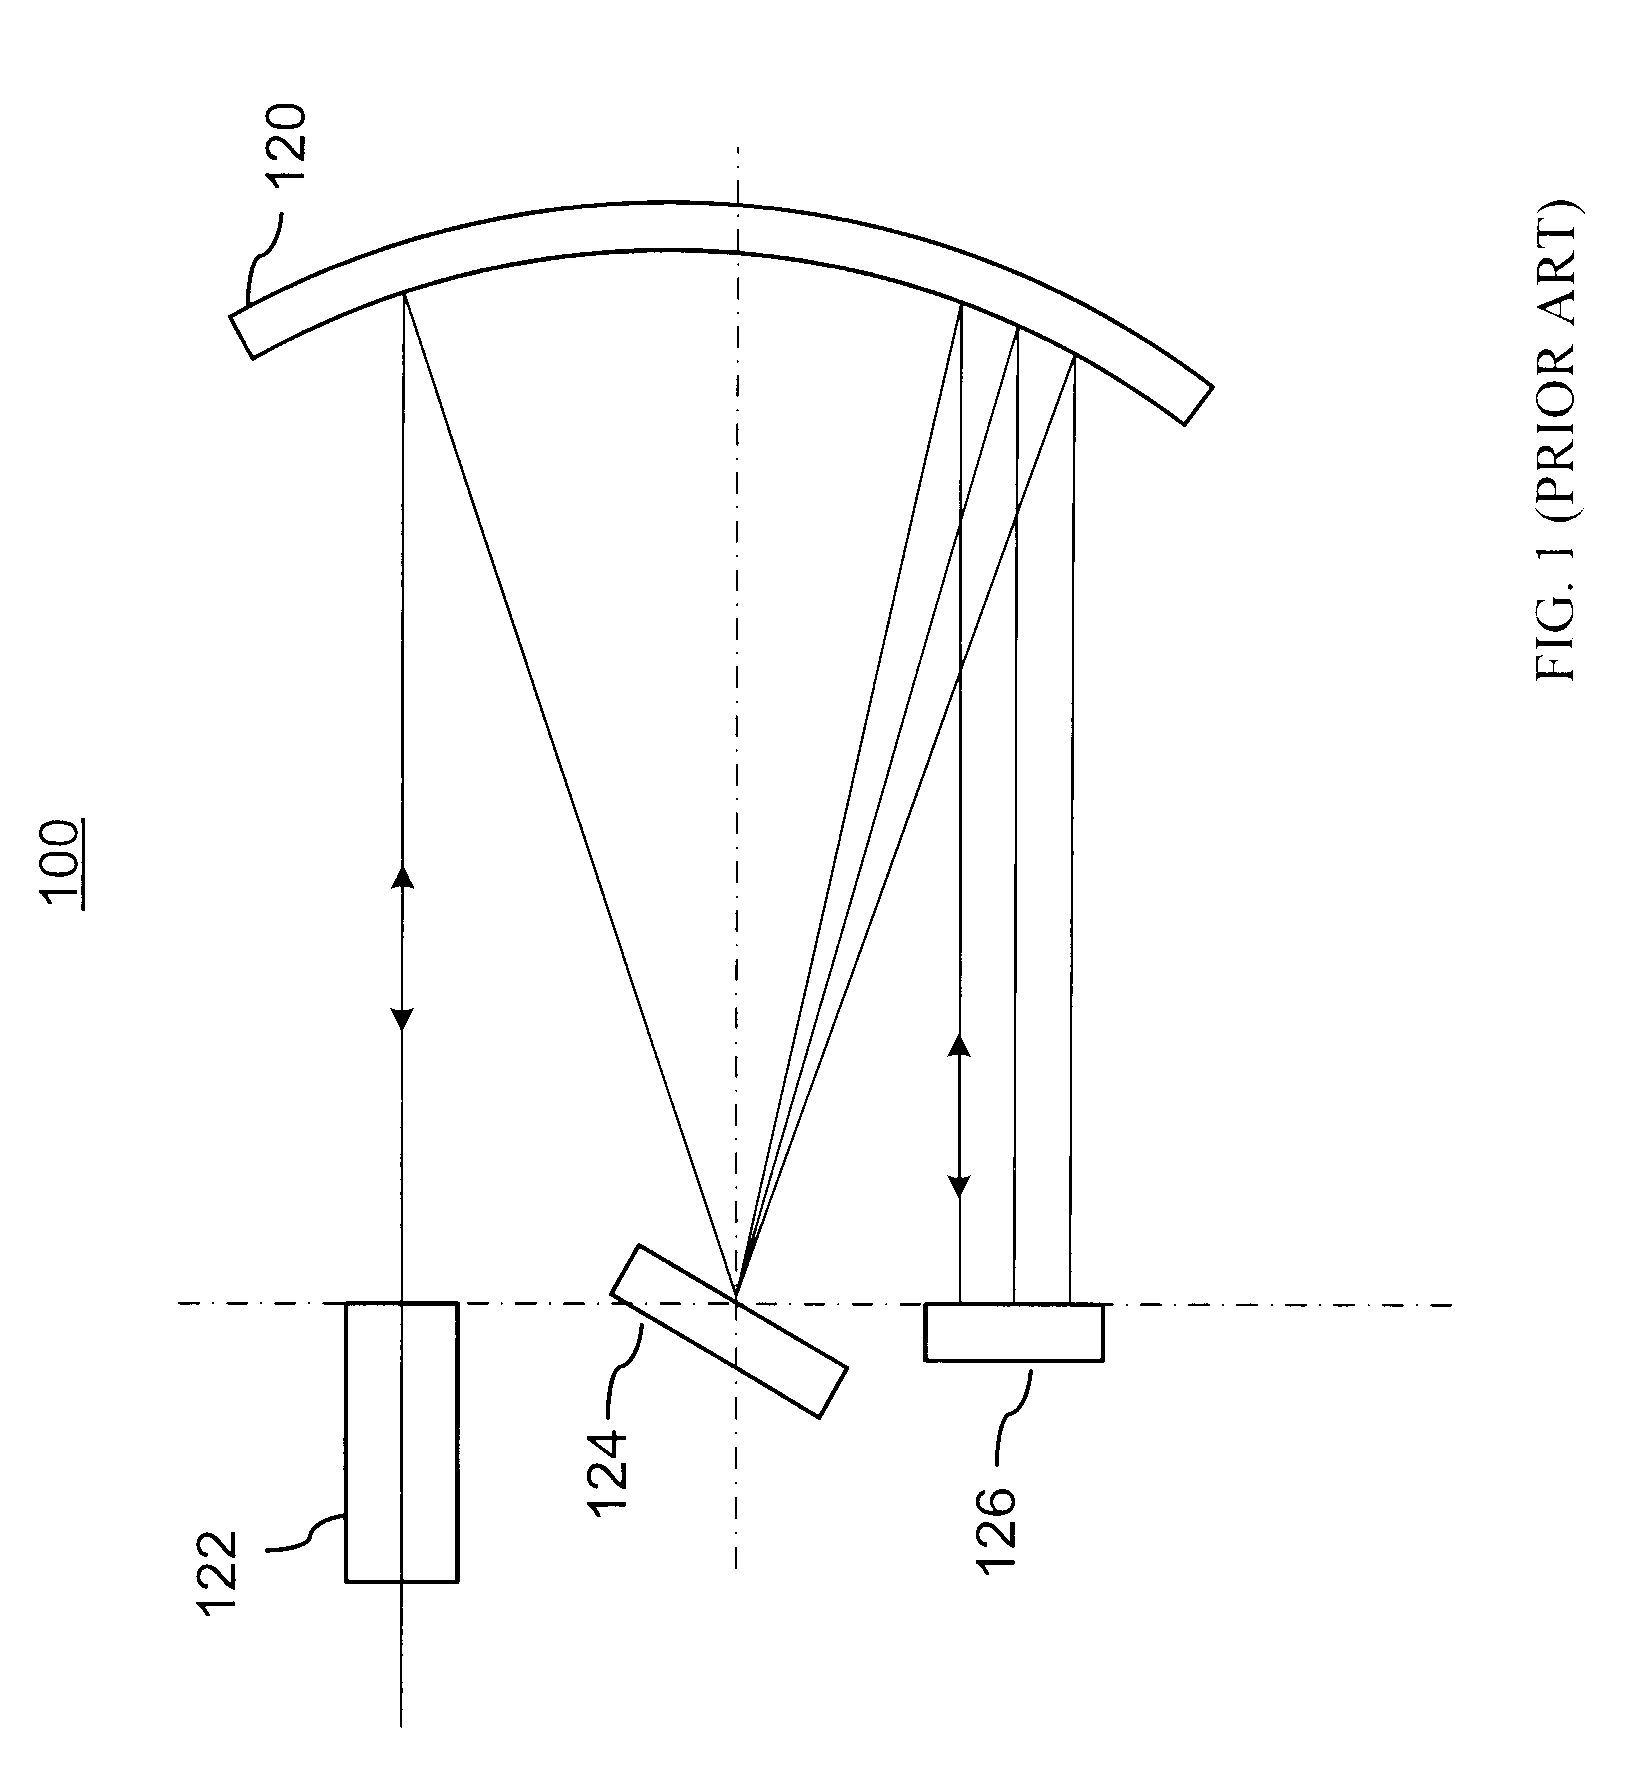 Wavelength dispersive device with temperature compensation